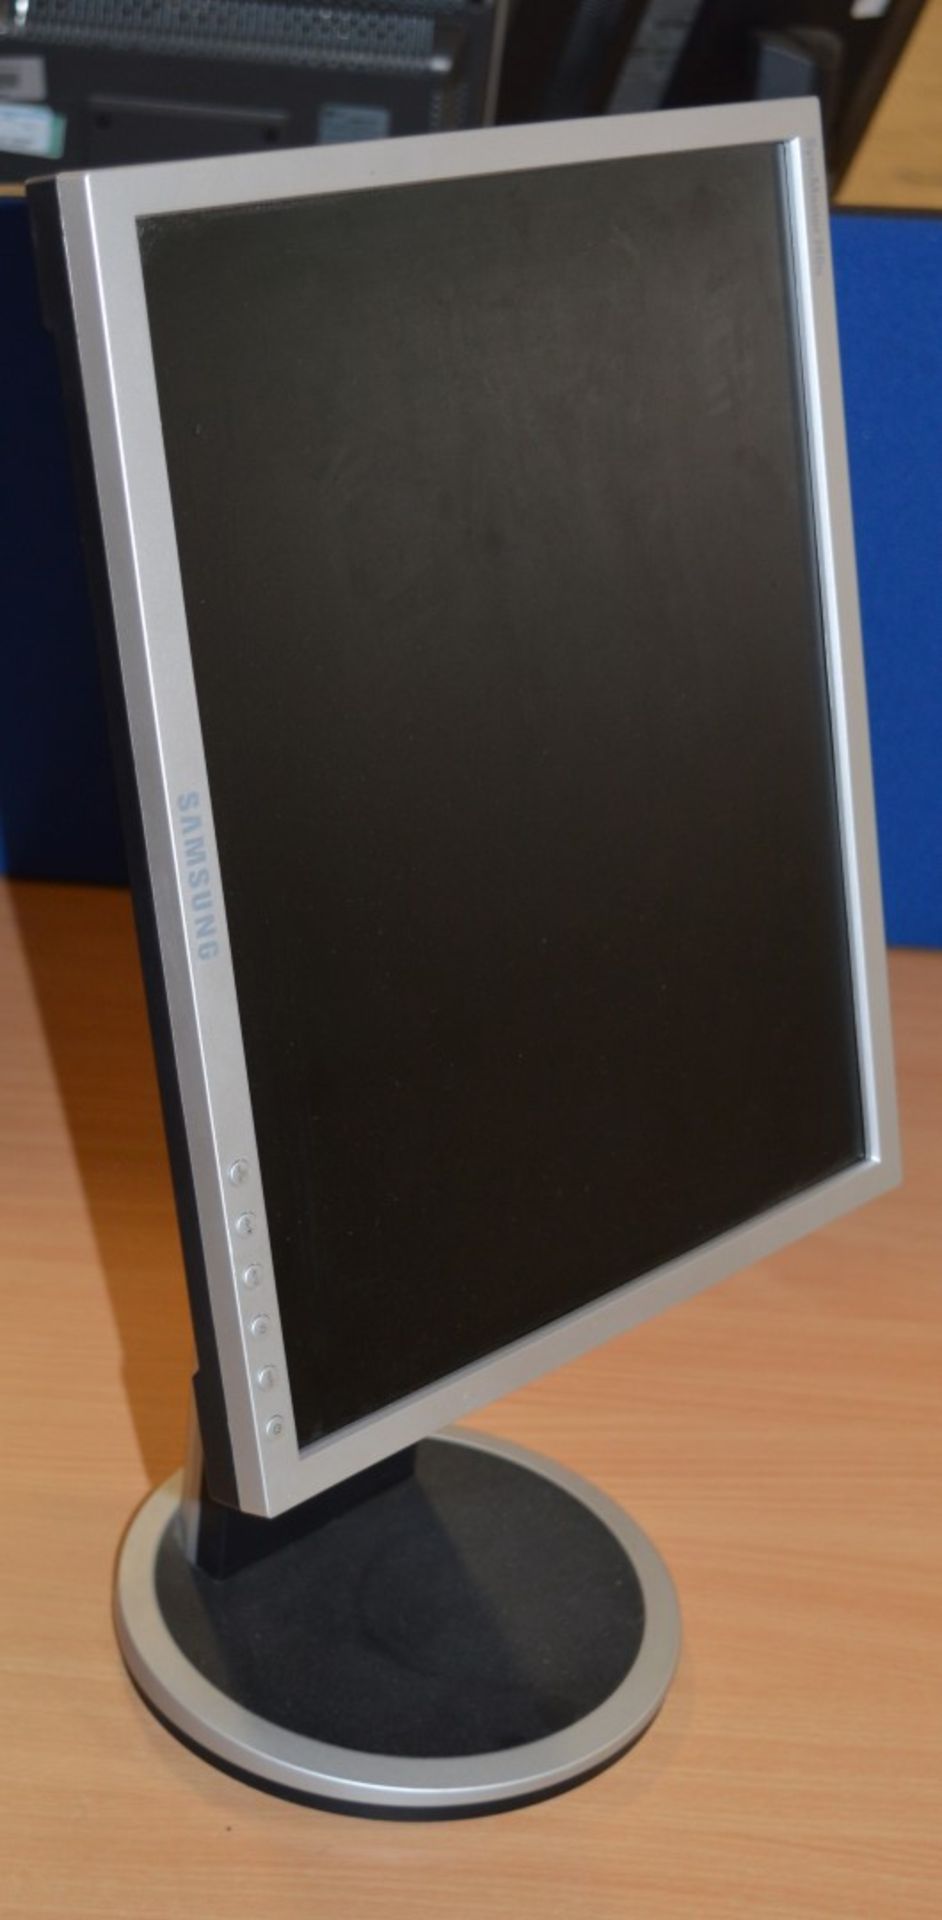 2 x Samsung Syncmaster 740N Flatscreen LCD Monitors - 17 Inch Screen Size - 1280 x 1024 Native - Image 2 of 4